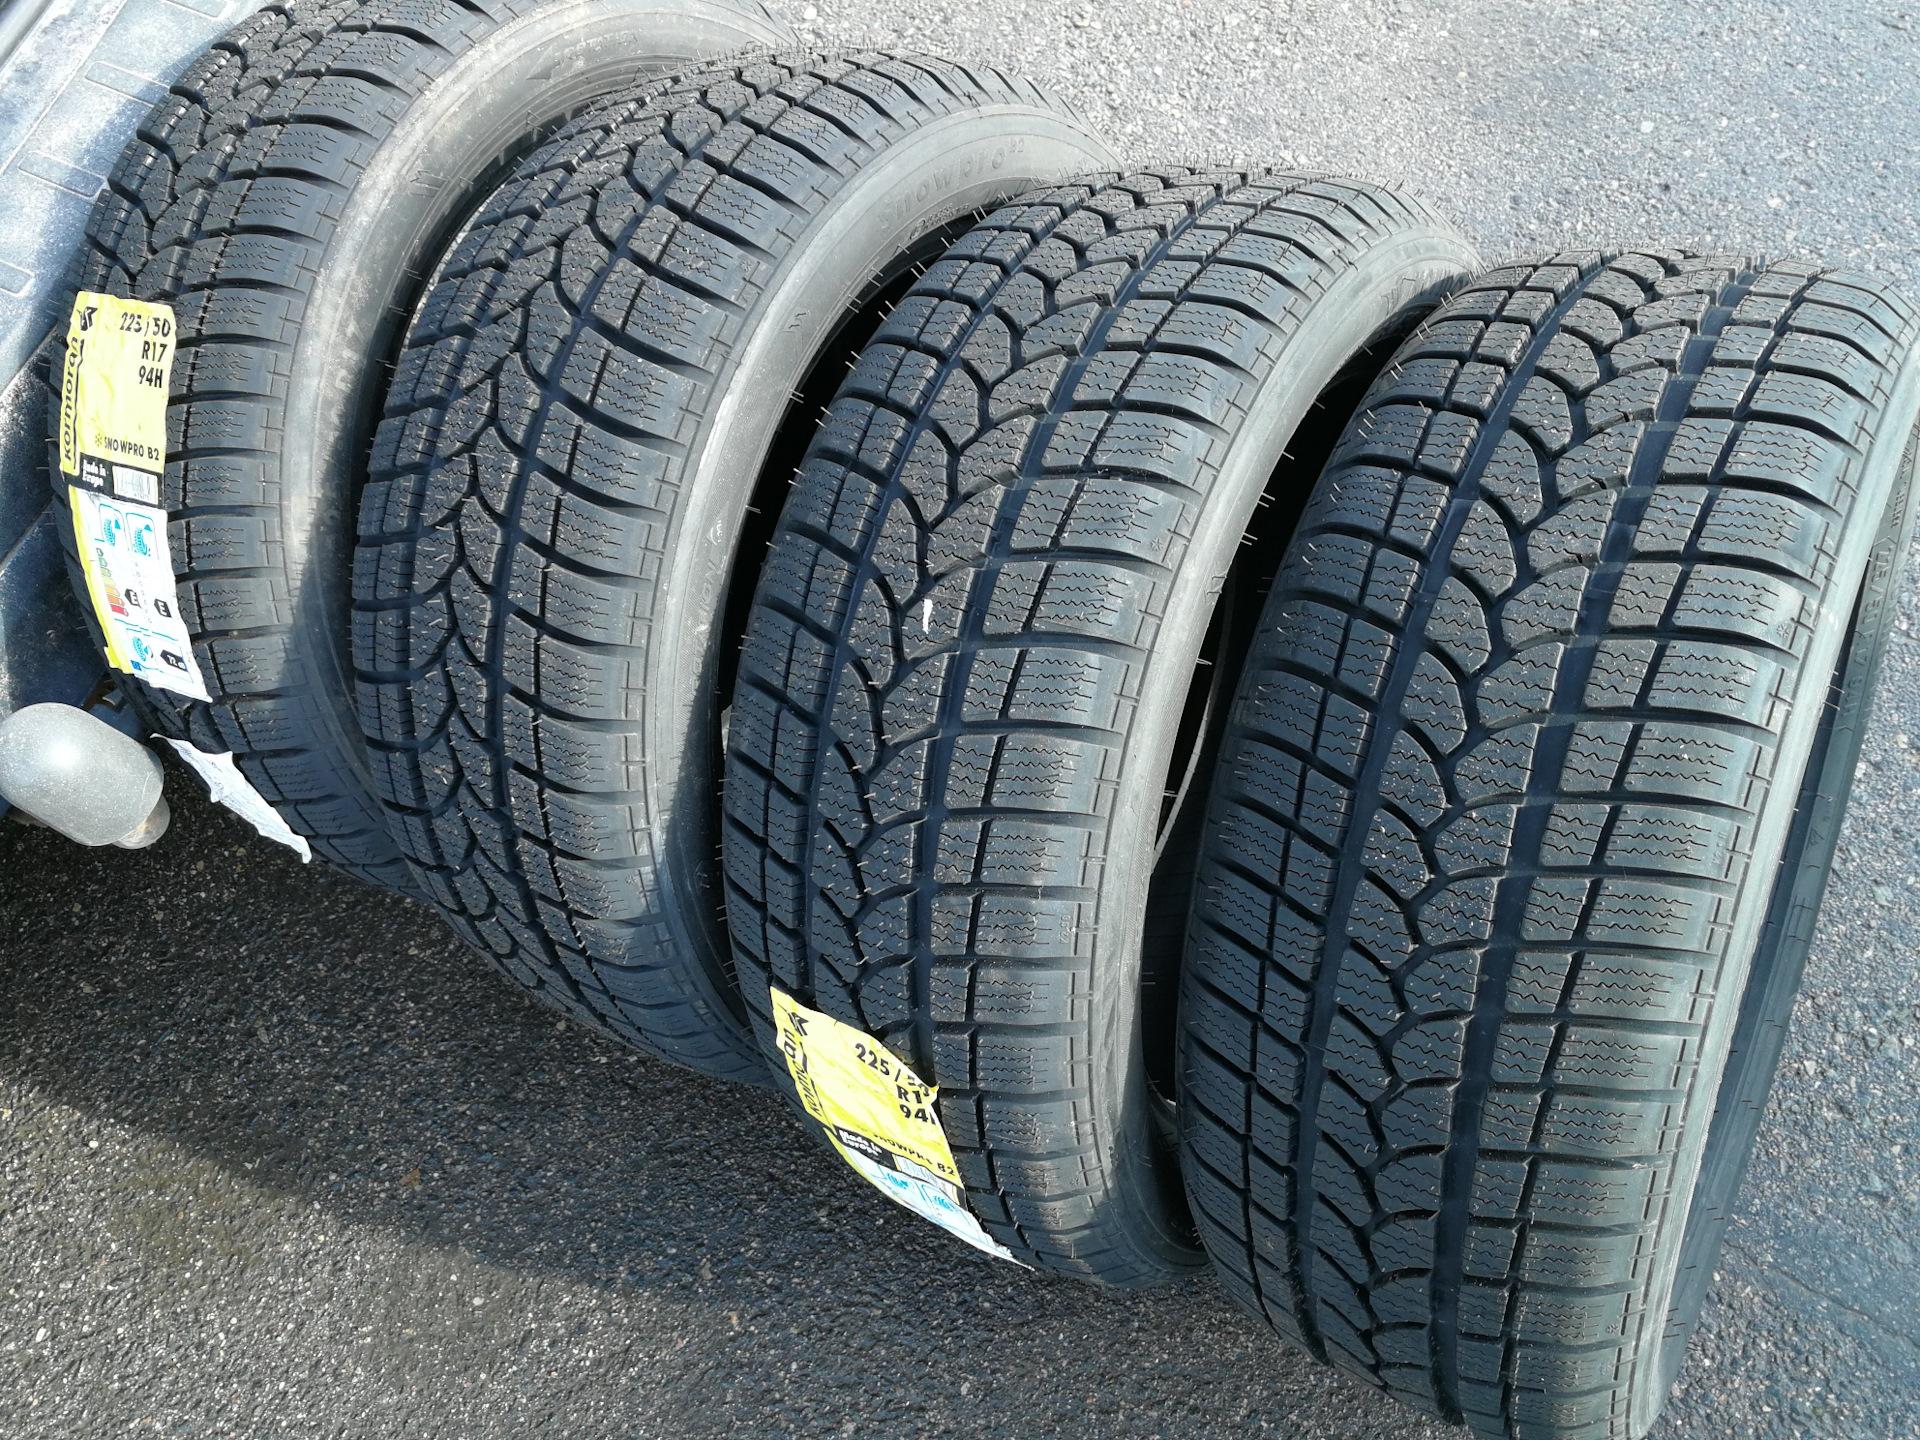 Recenzie zimných pneumatík na suchý zips od Kormoran SnowPro B2 a B4